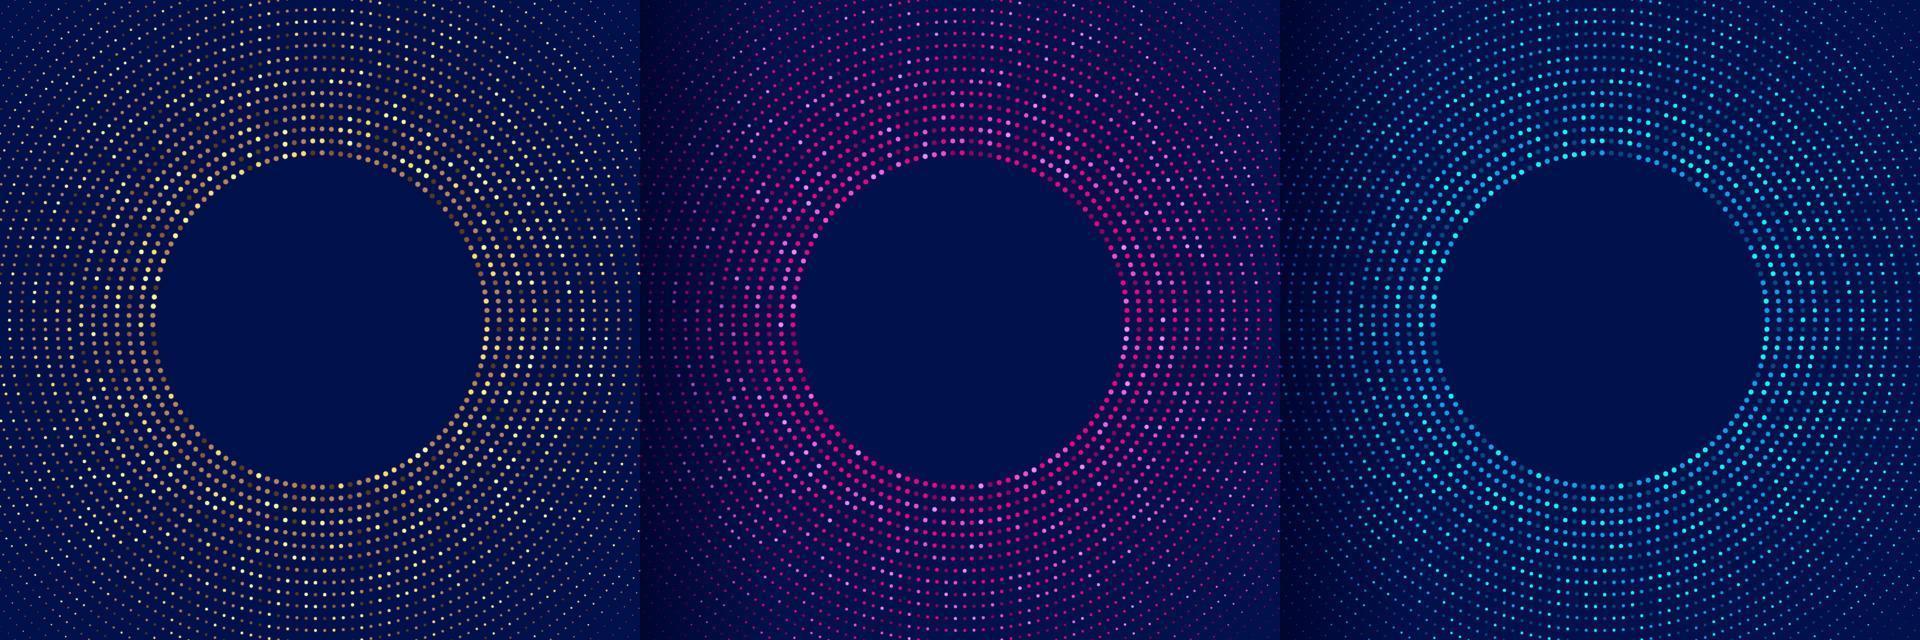 conjunto de patrón radial de brillo de punto de luz brillante rosa, azul, verde, dorado abstracto sobre fondo azul oscuro. colección de semitonos de puntos iluminados. concepto de tecnología futurista. ilustración vectorial vector